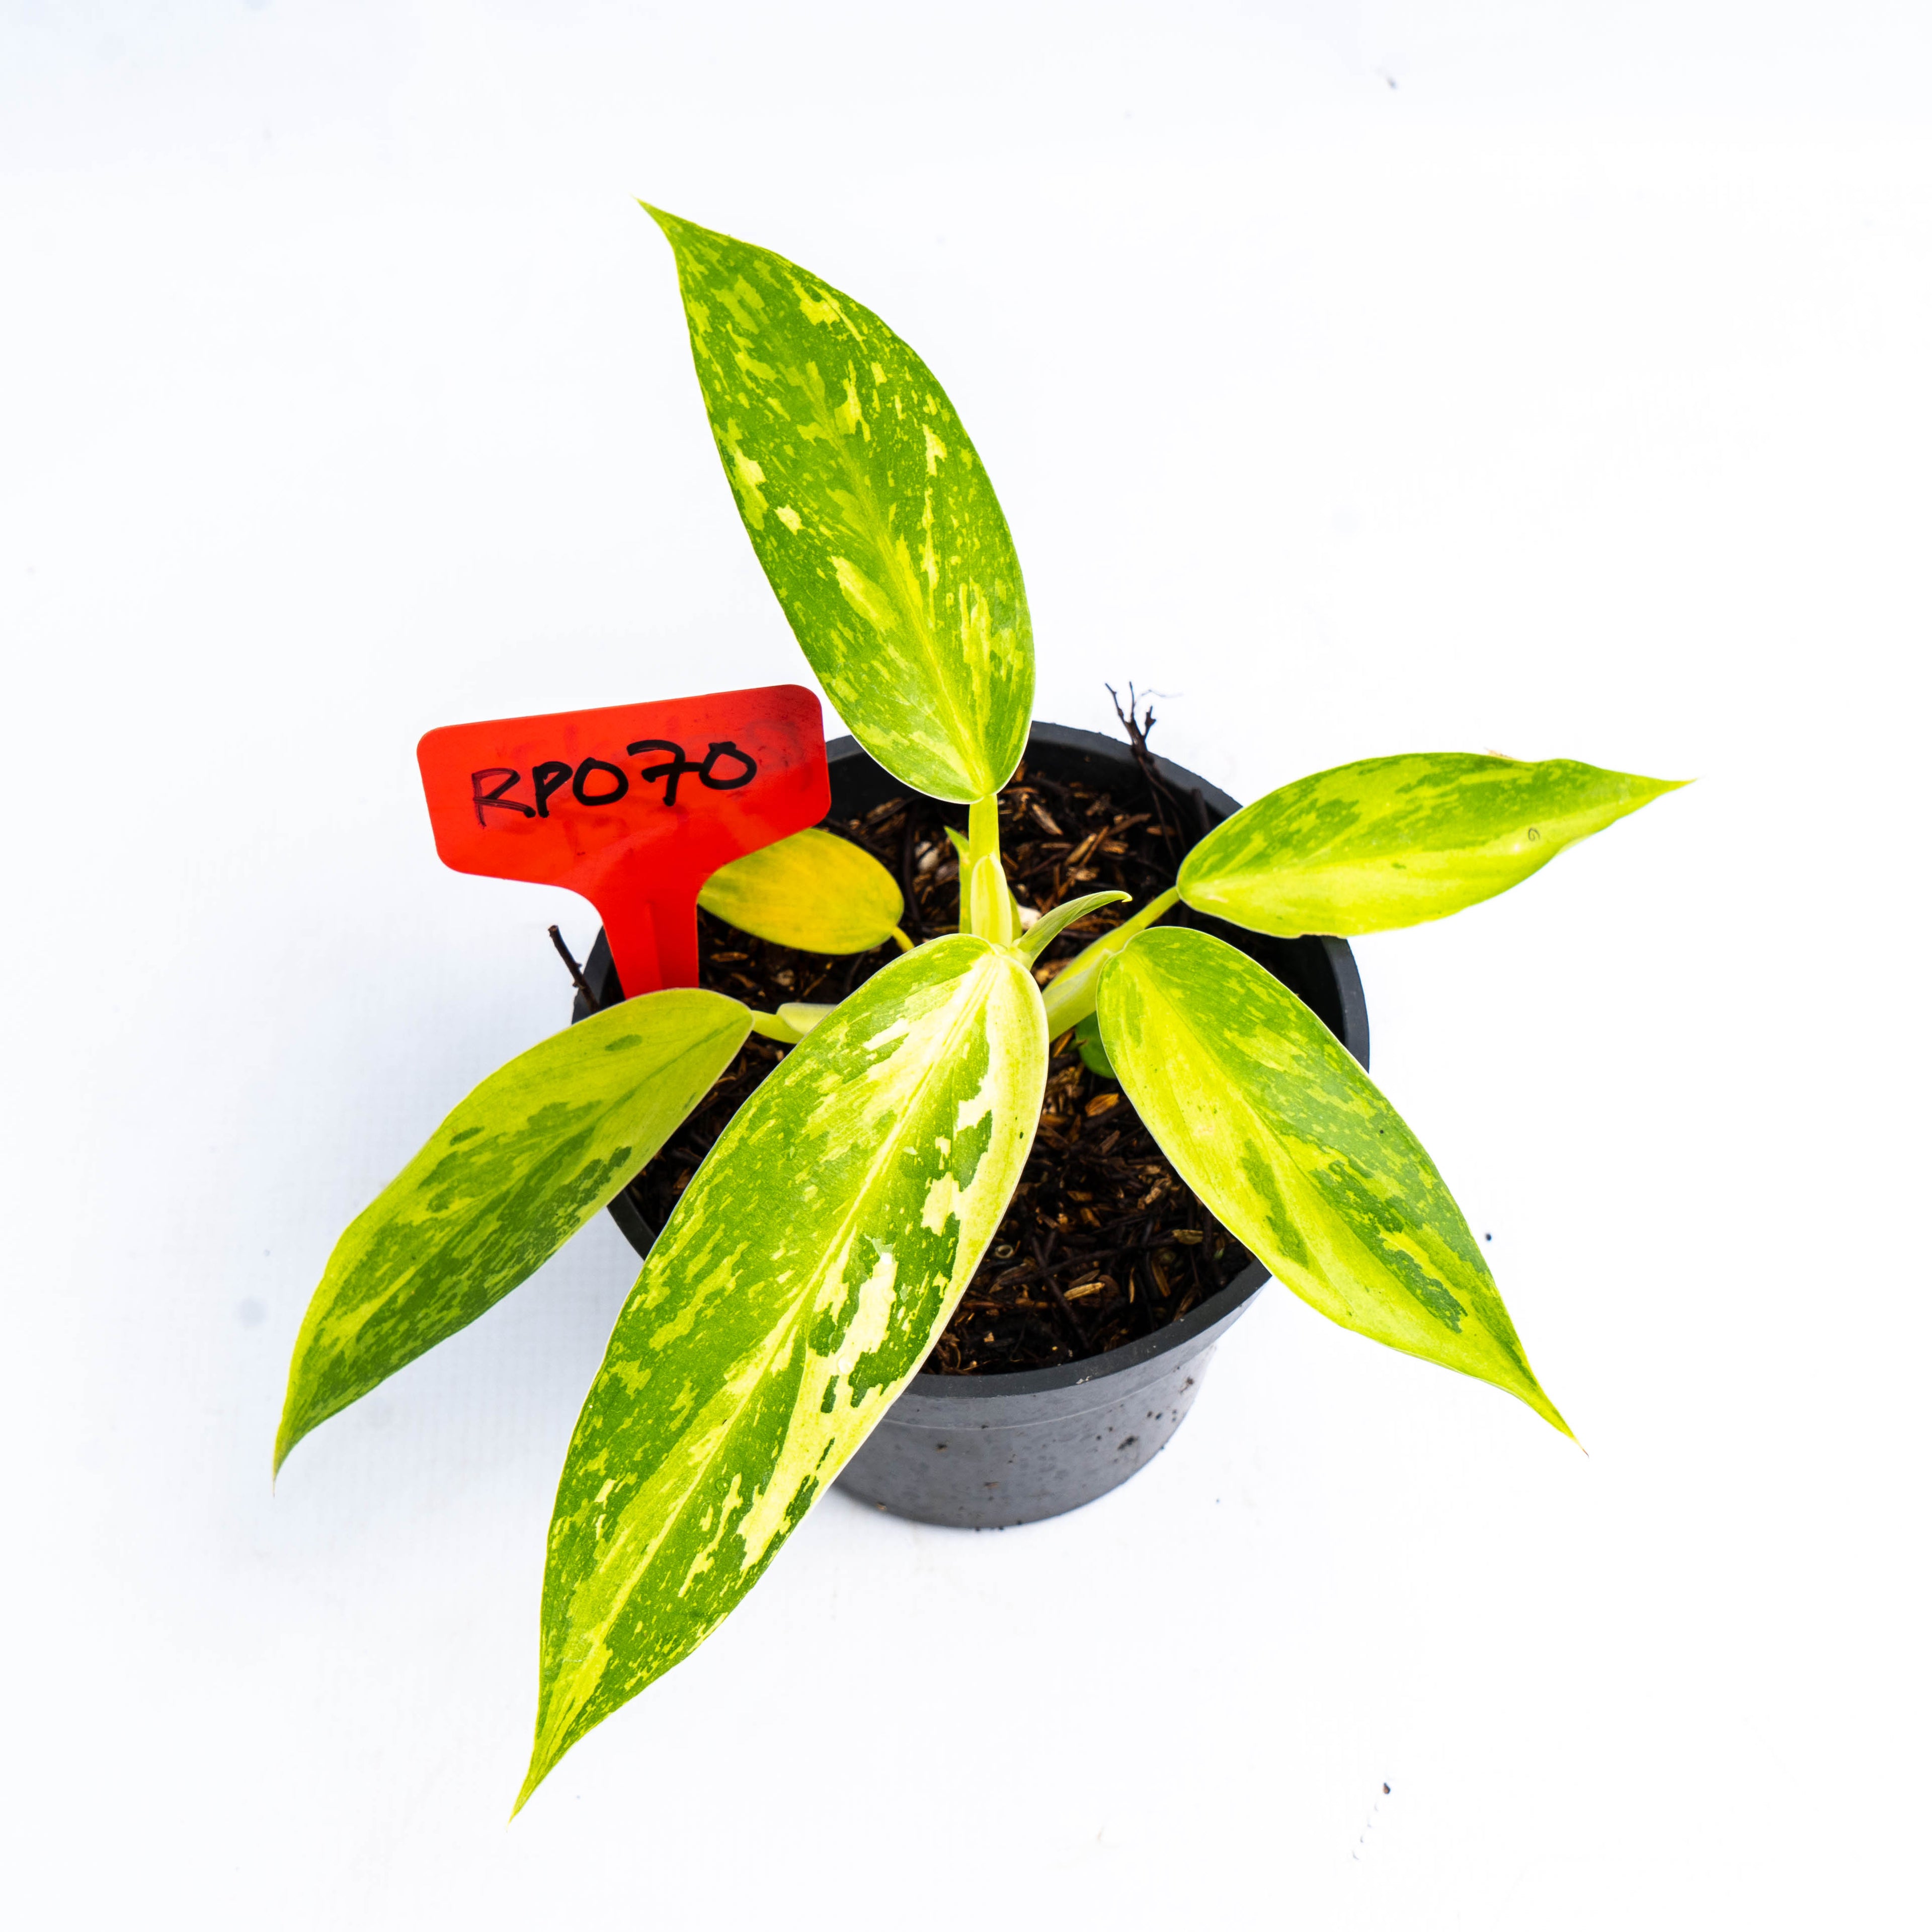 RP070 Philodendron Jose Buono Little